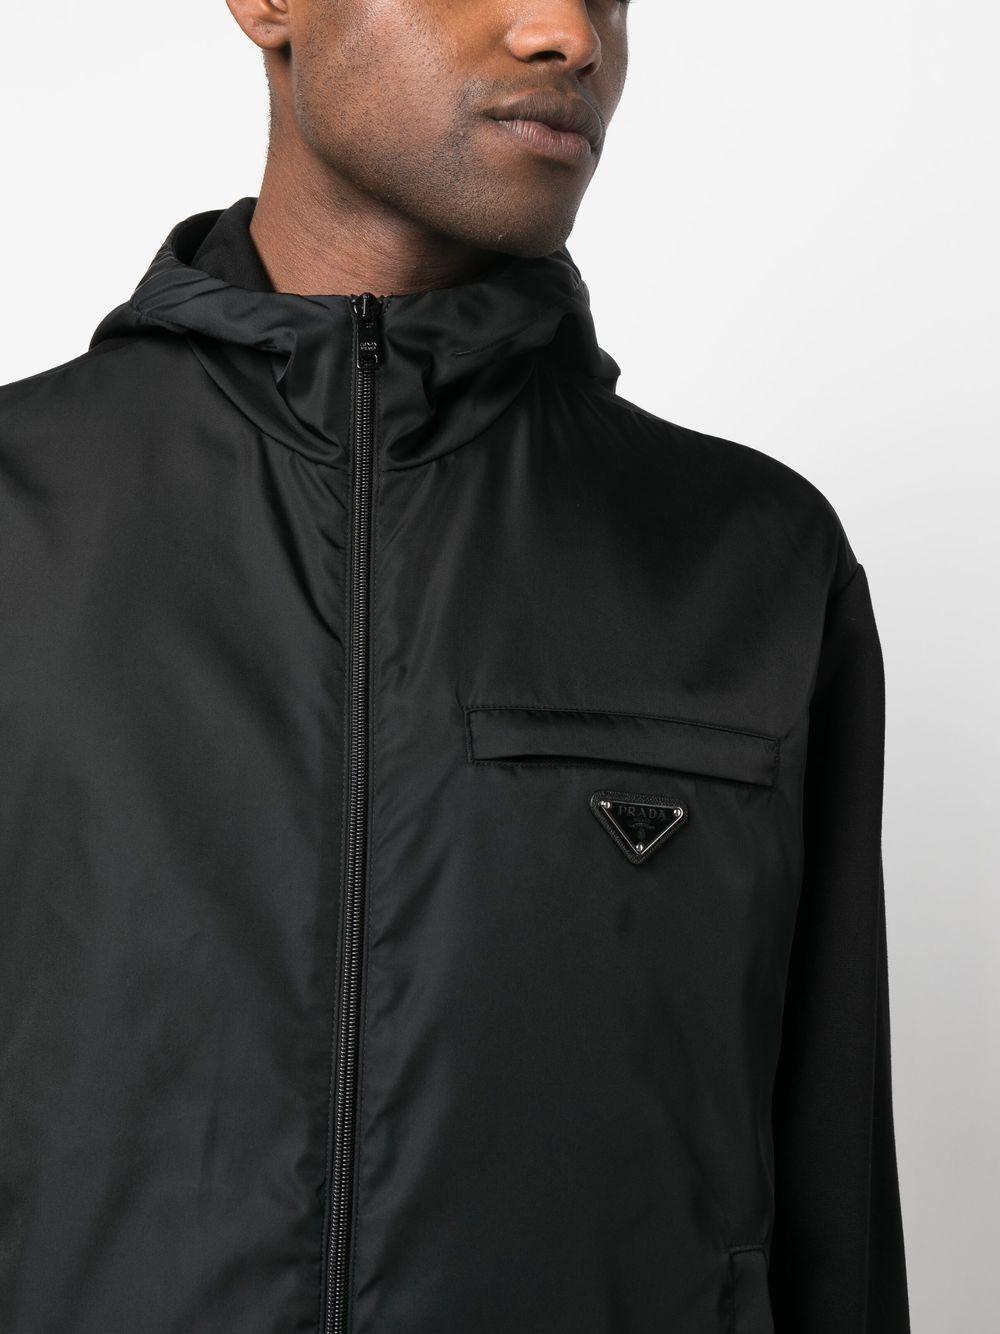 Prada Triangle-logo Zip-up Hooded Jacket in Black for Men | Lyst